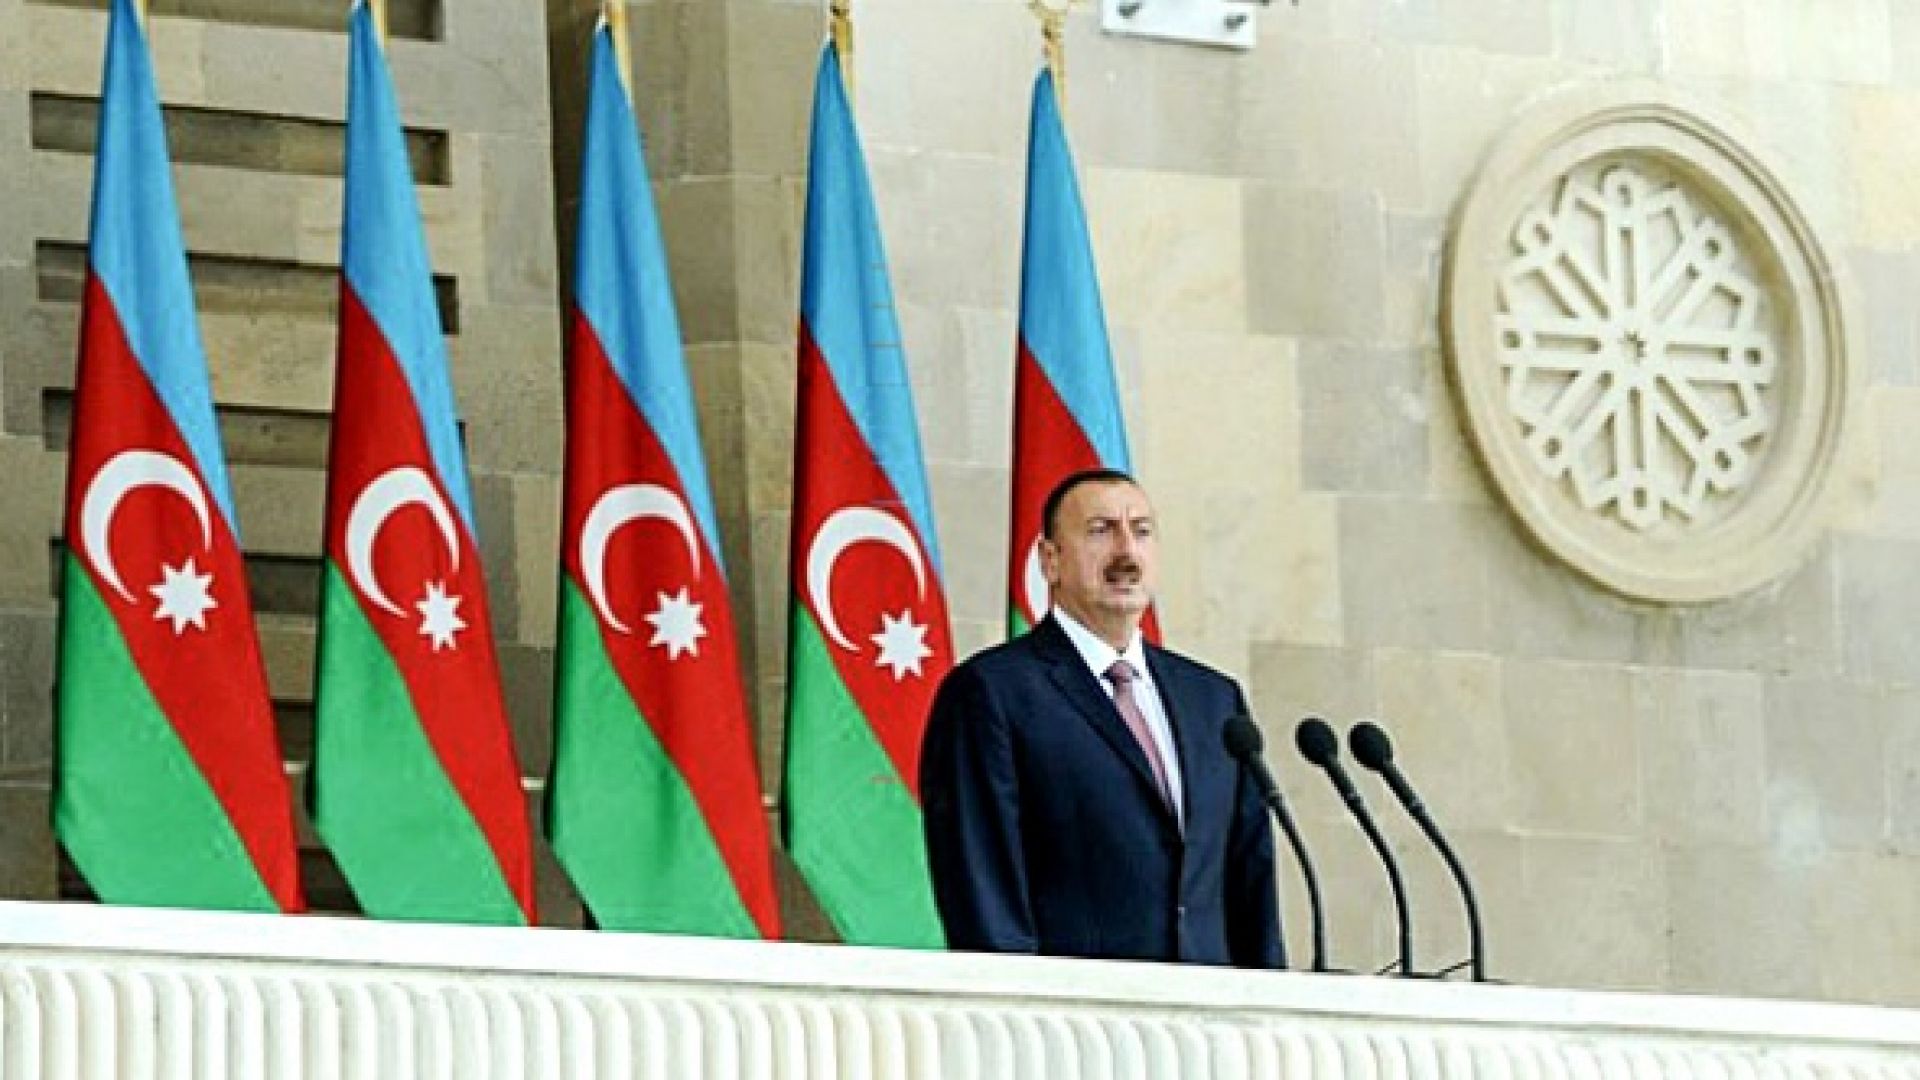 president of Azerbaijan and flags